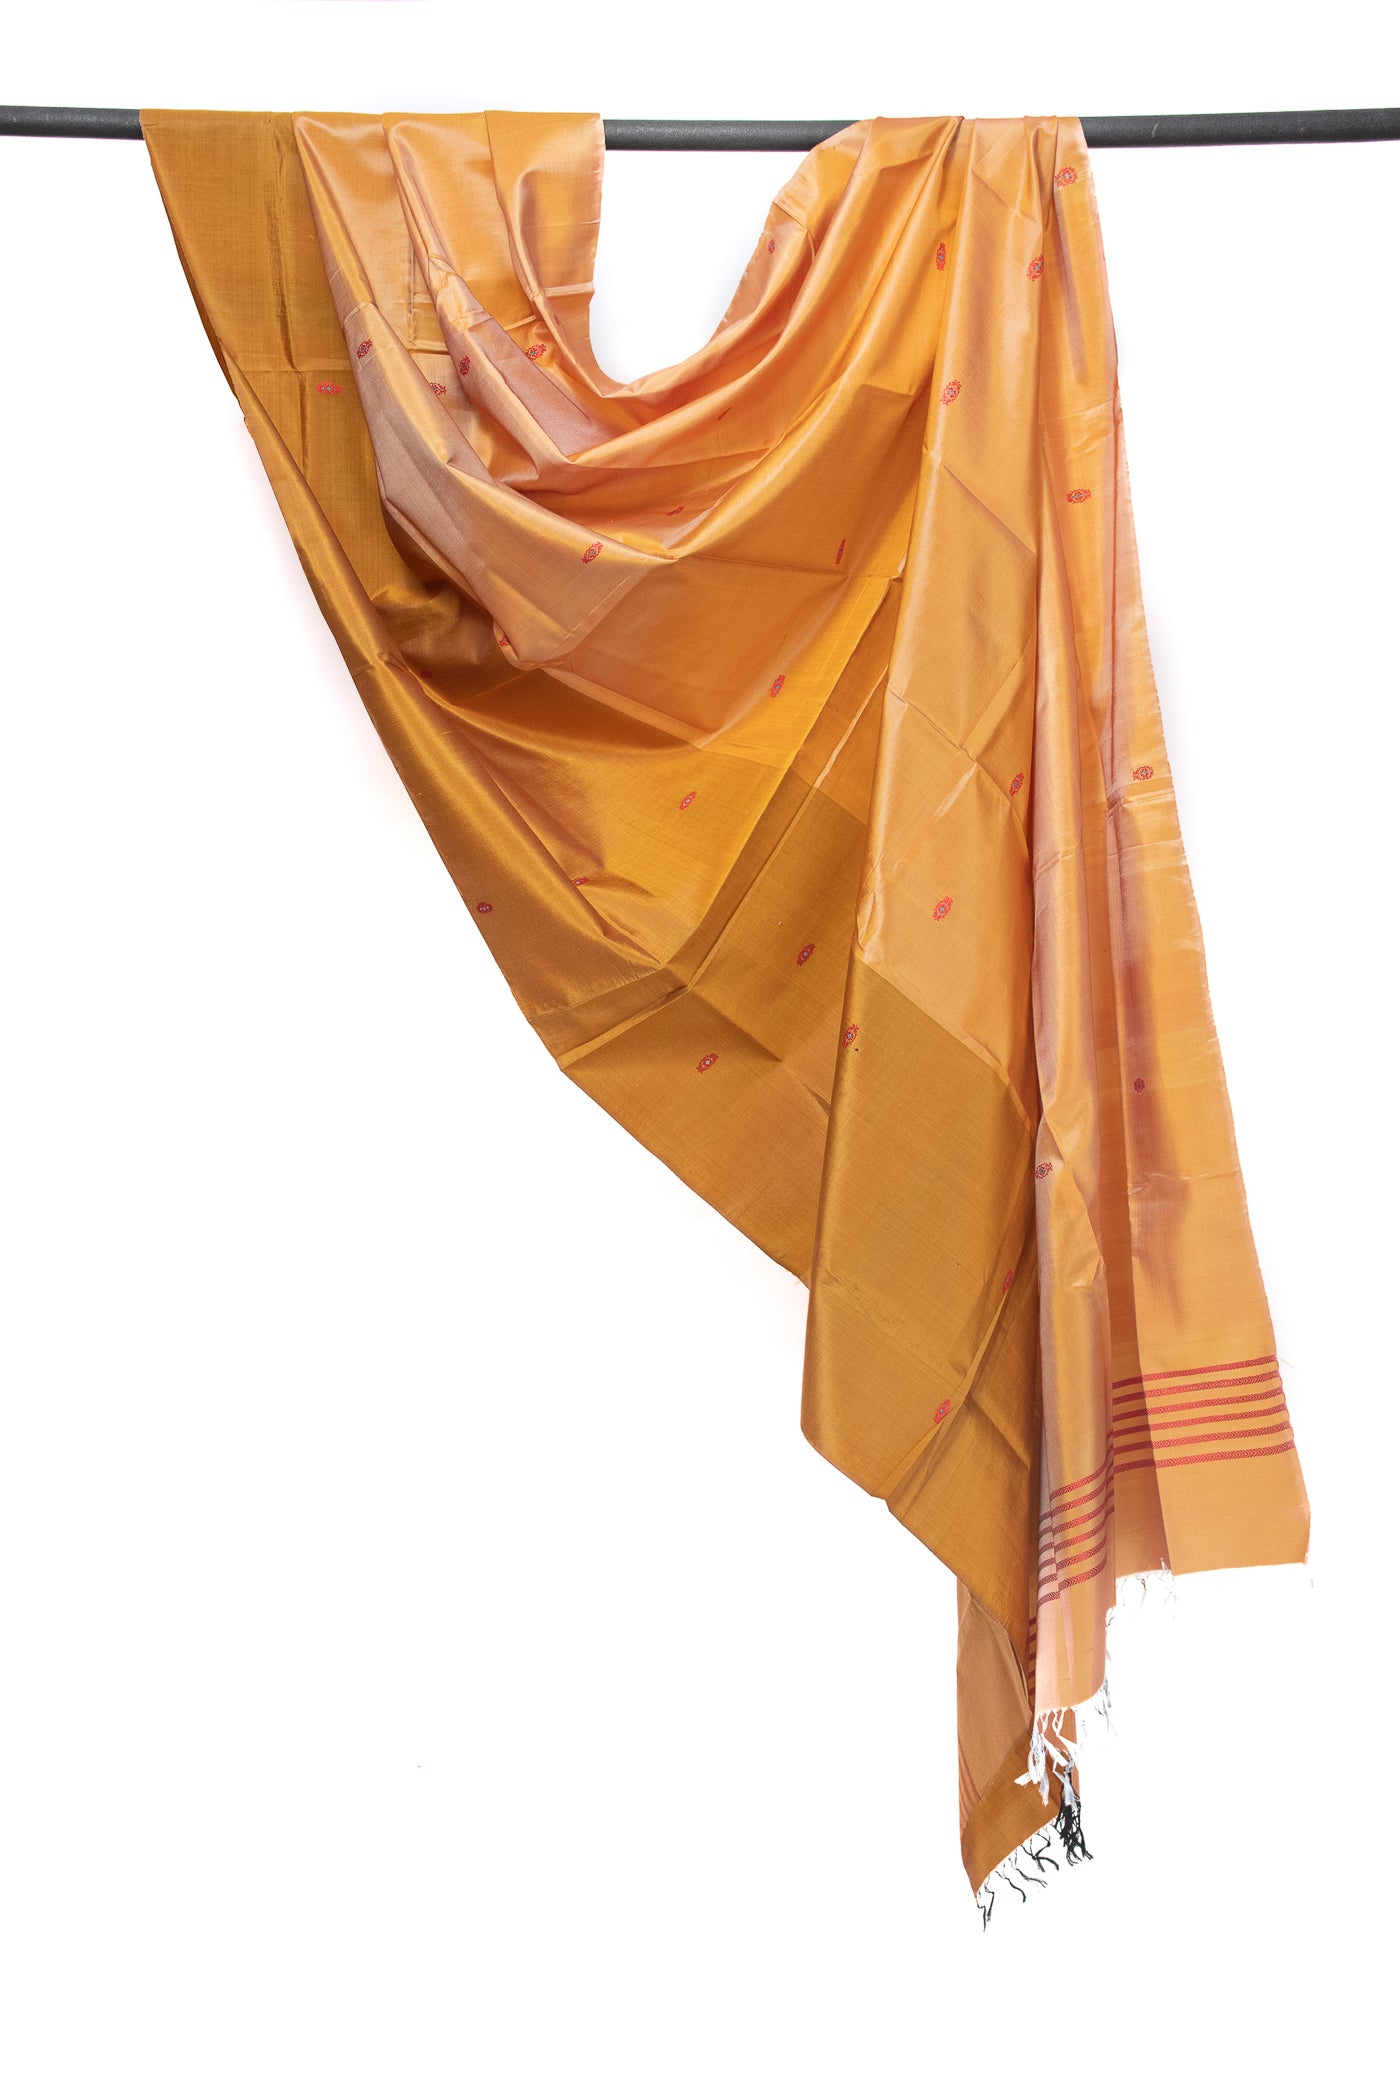 Yellow Pure Silk Hand woven Dupatta MIH025